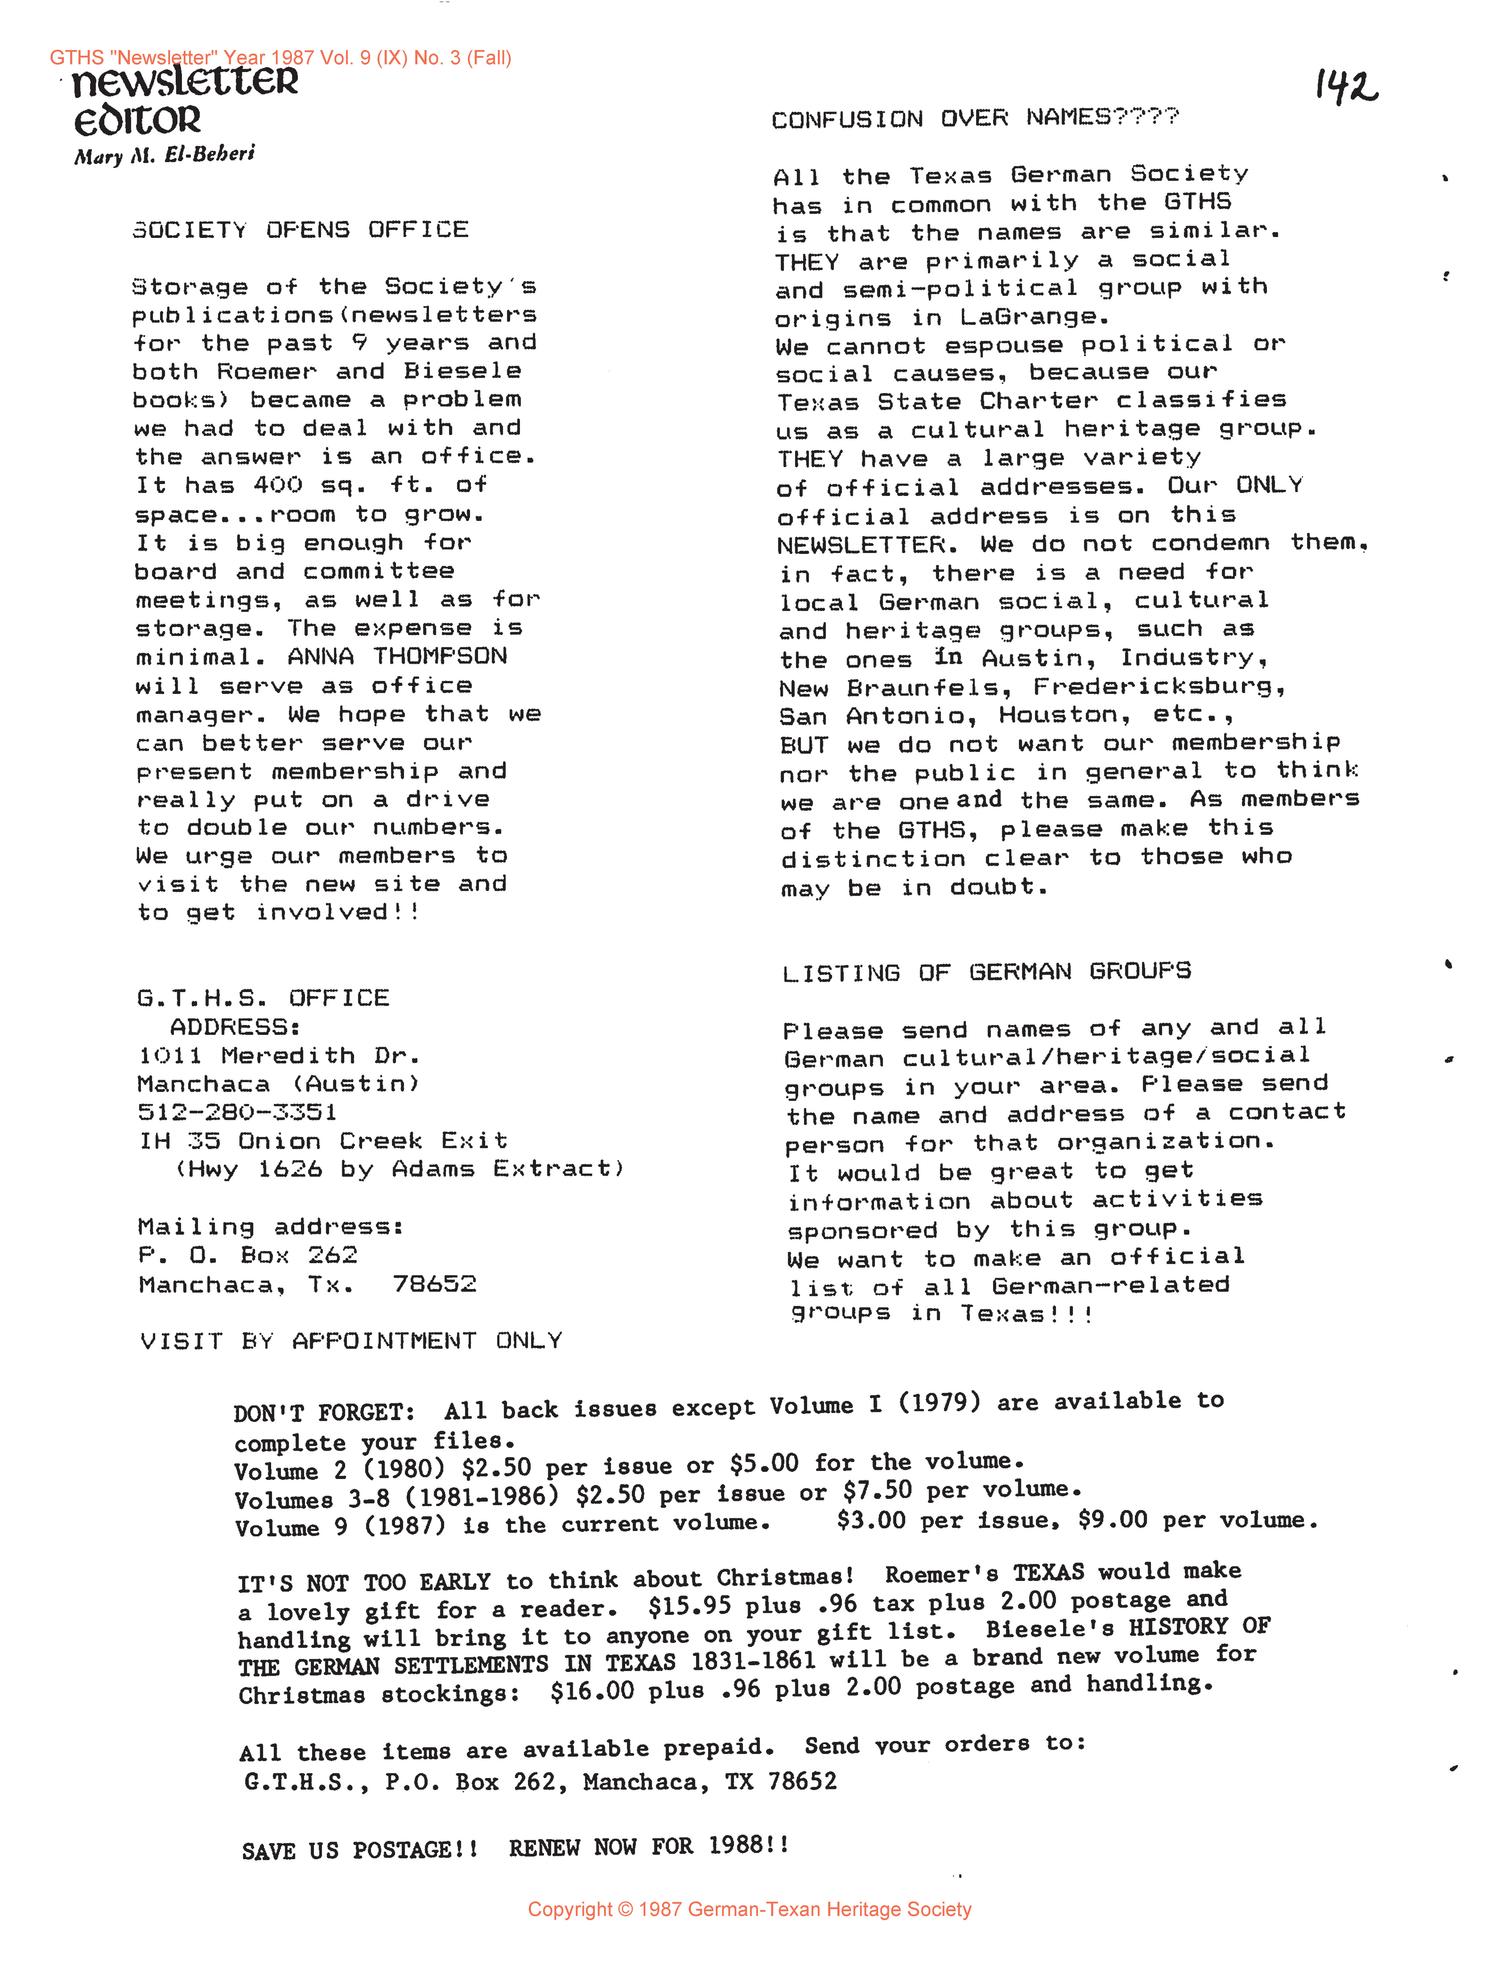 German-Texan Heritage Society Newsletter, Volume 9, Number 3, Fall 1987
                                                
                                                    142
                                                